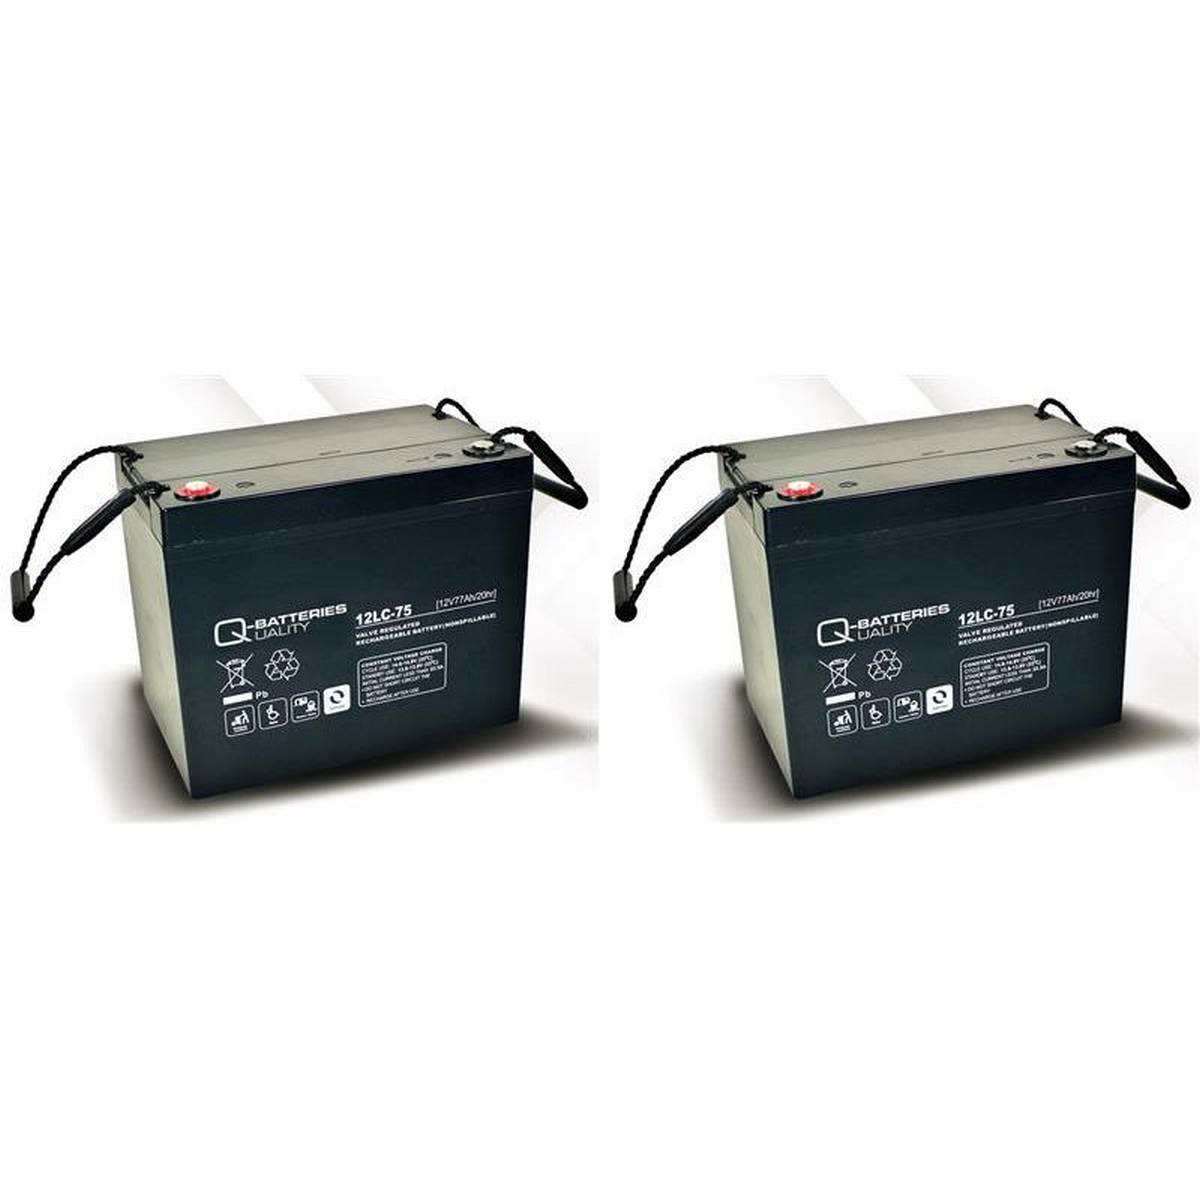 Batteria di ricambio per Sopur E155 2 pezzi Q-Batteries 12LC-75 12V 77Ah AGM batteria resistente al ciclo